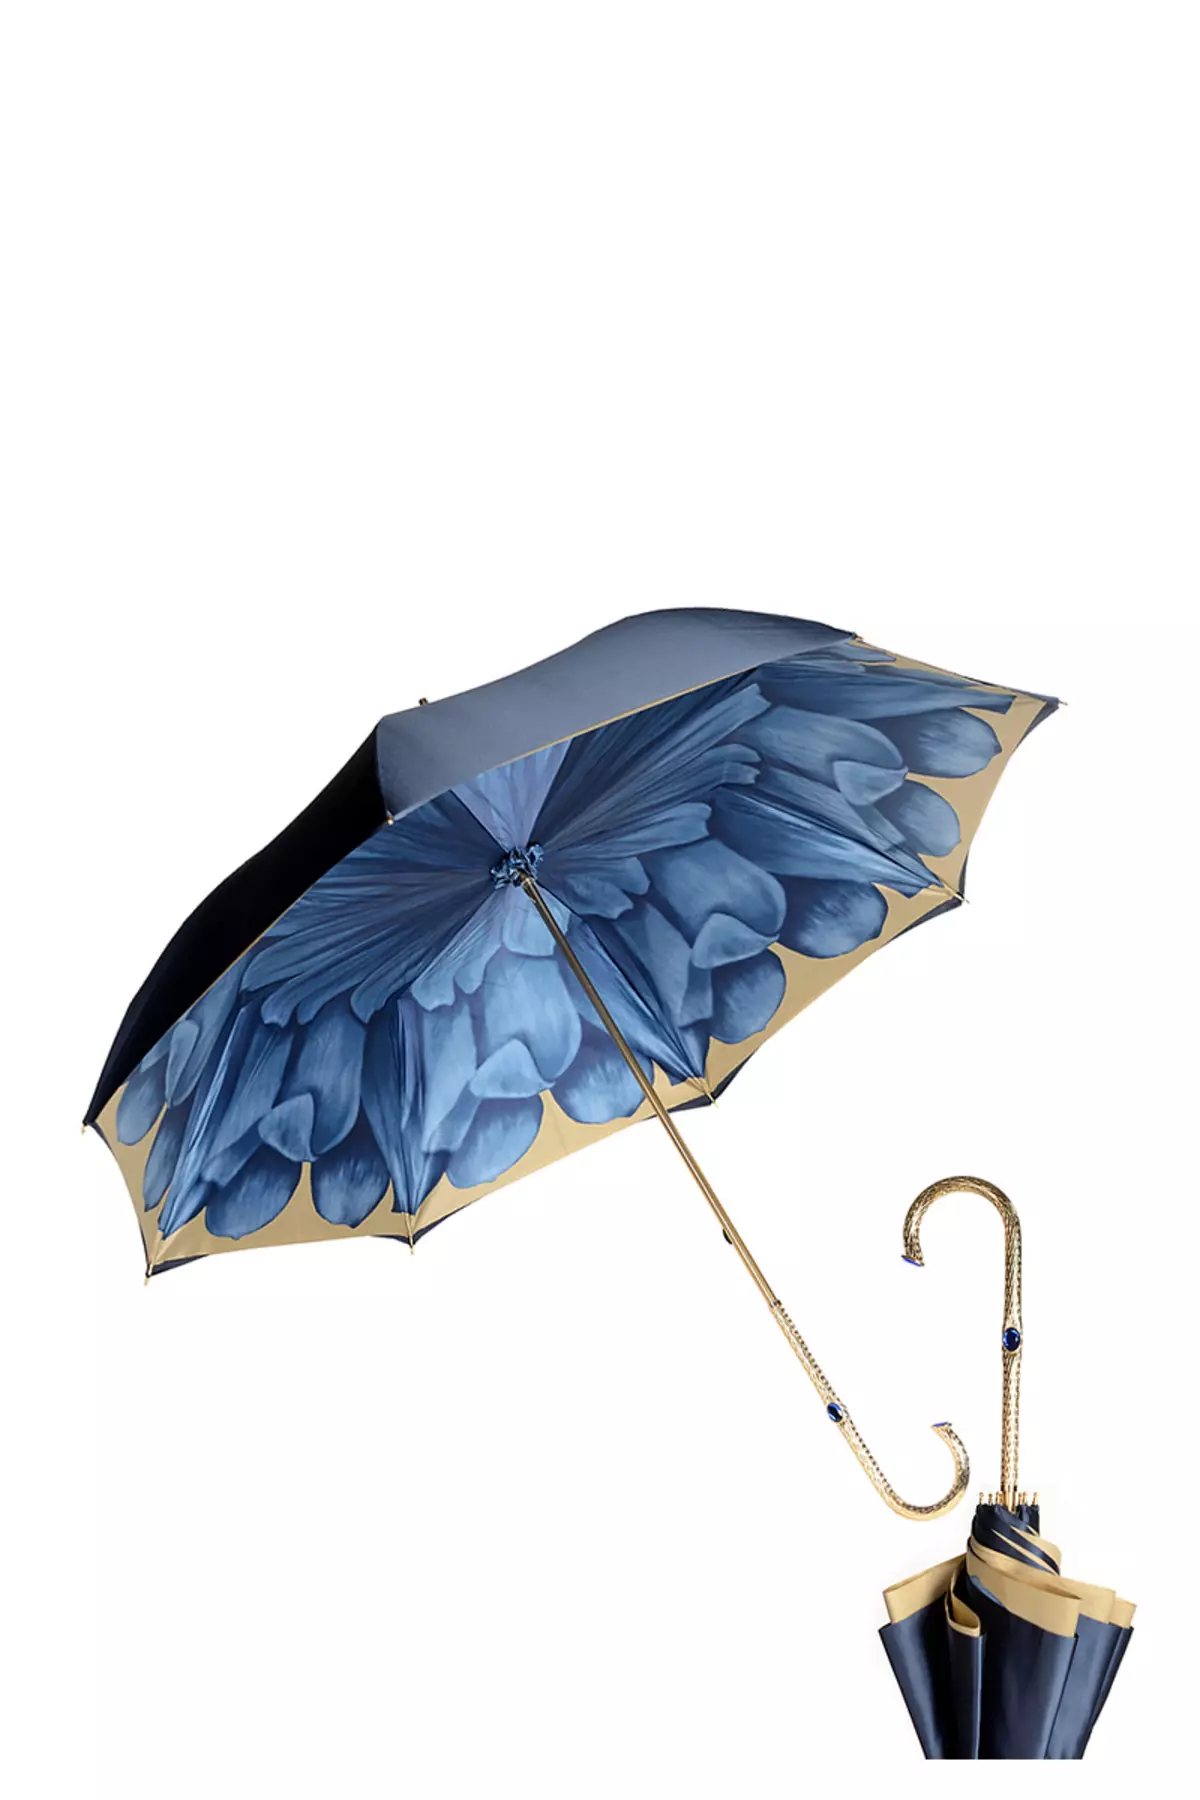 Pasotti ομπρέλες (55 φωτογραφίες): Χαρακτηριστικά του γυναικείου μοντέλου 15232_31